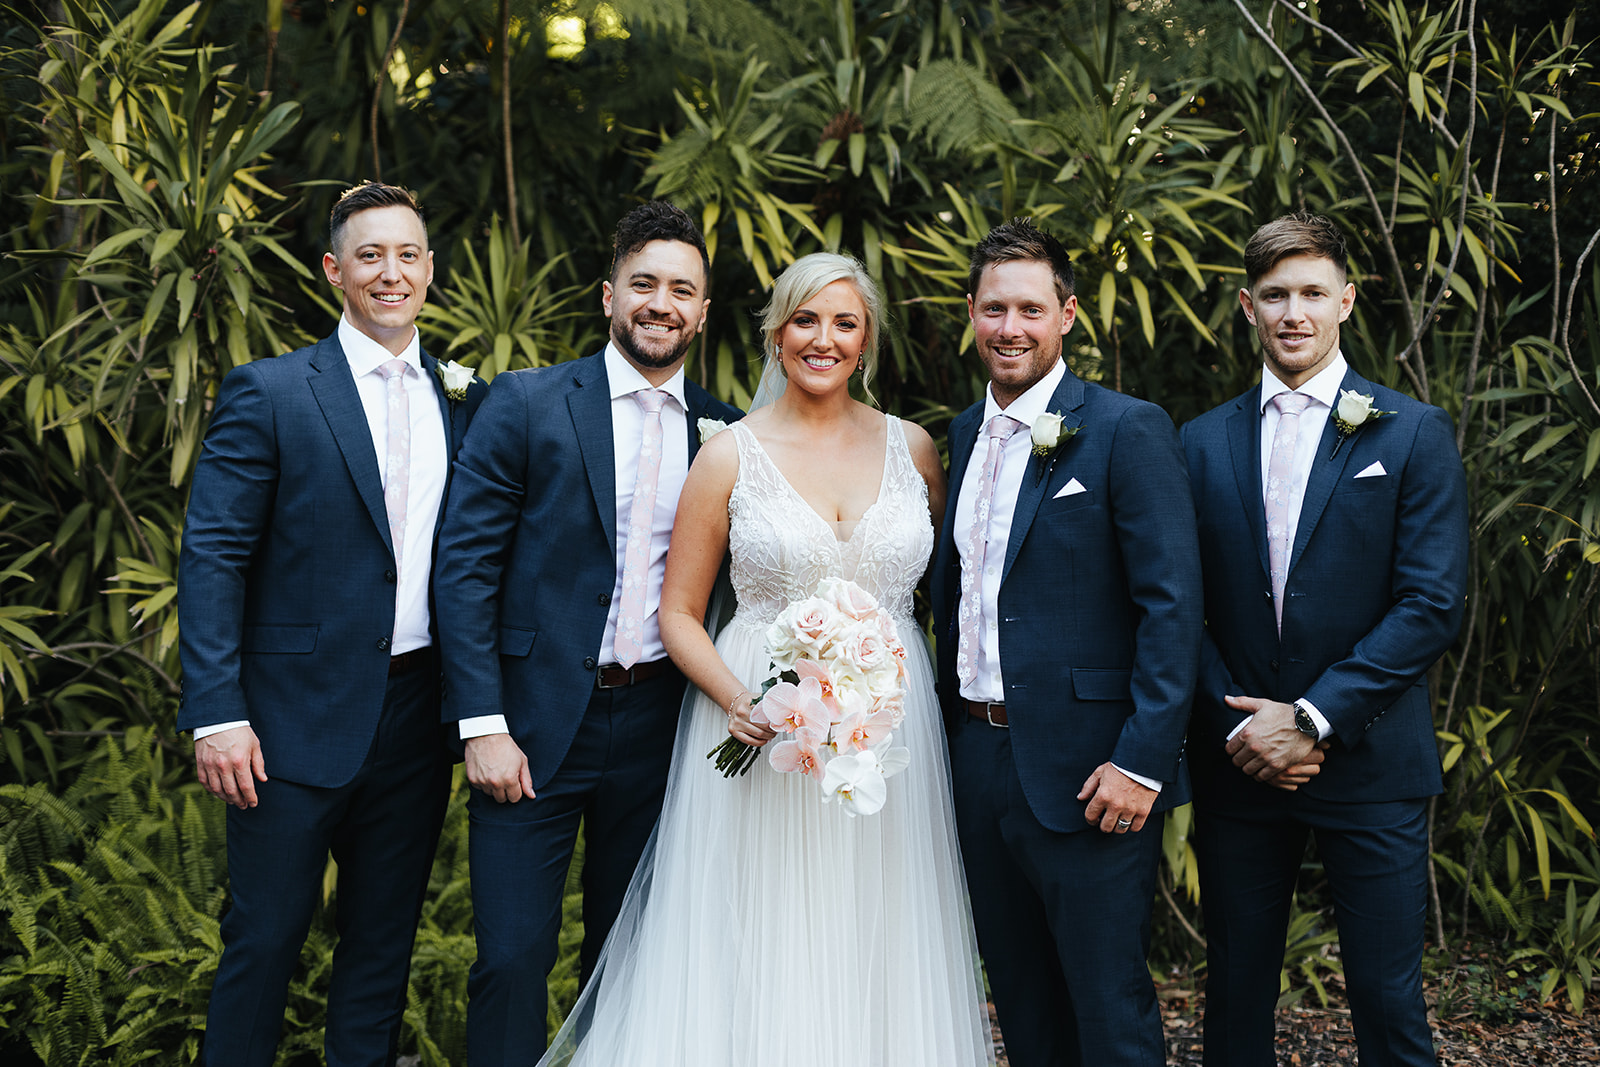 Bride and groomsmen at The Terrace Royal Botanic Gardens Melbourne wedding